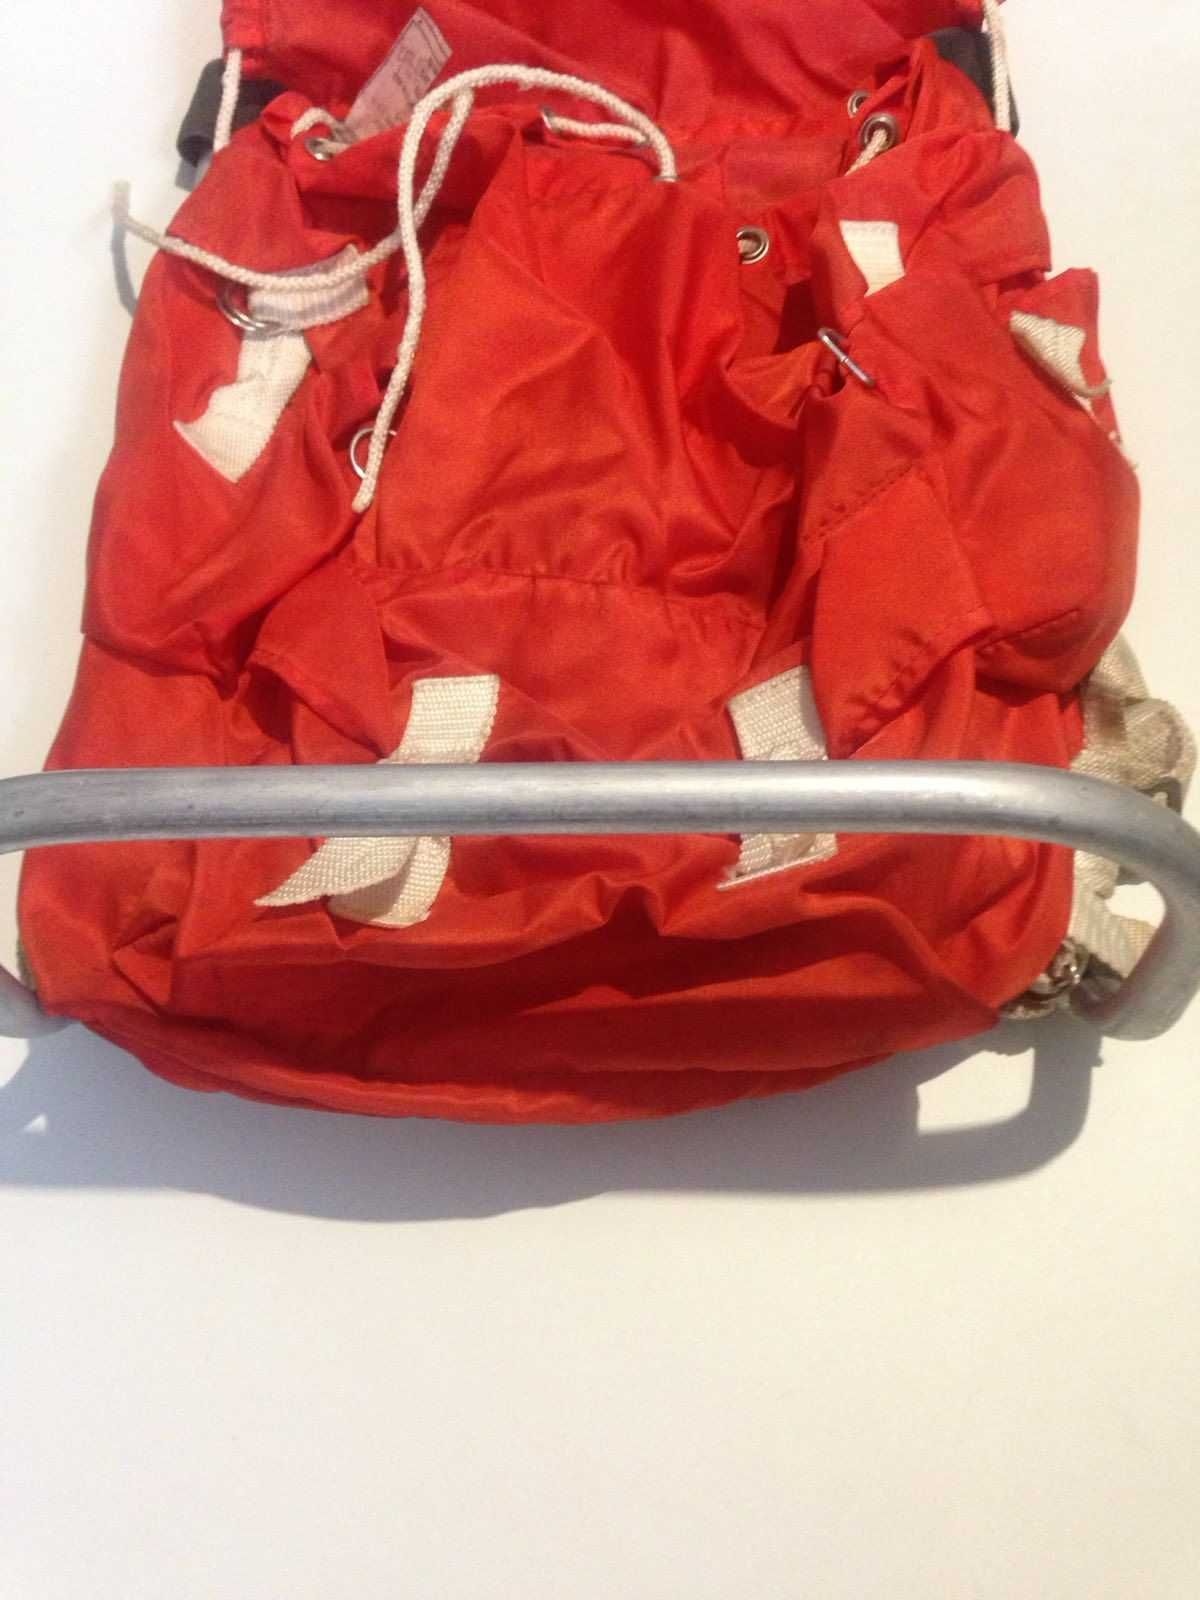 рюкзак ермак станковый 1982, рюкзак СССР, рюкзак походный, старый